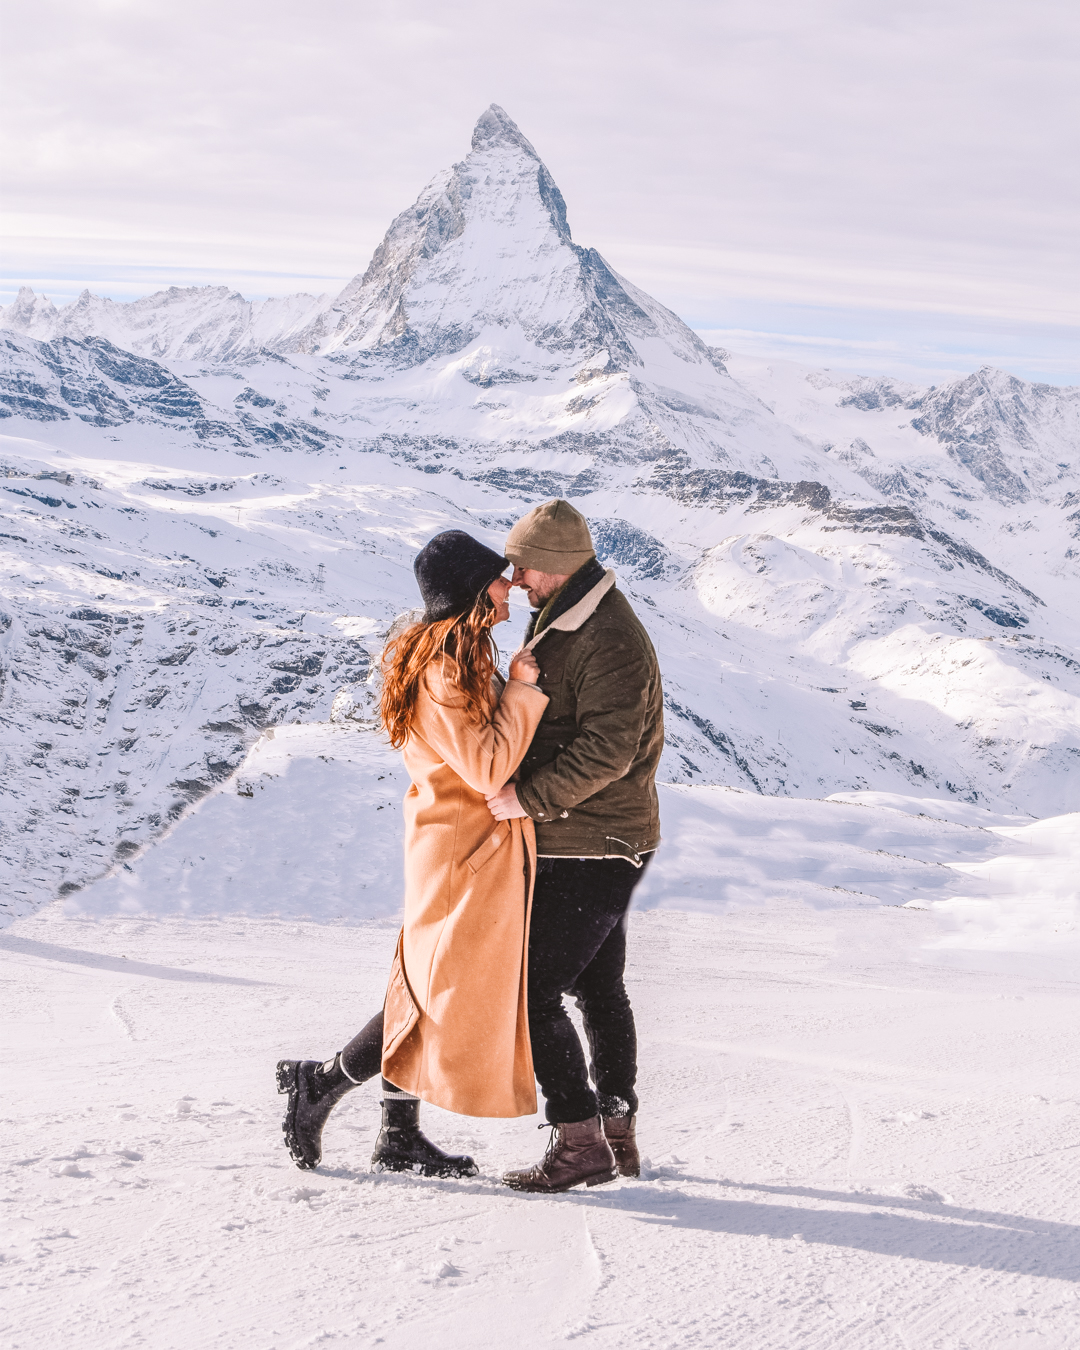 Chris and Reanna in Zermatt with the Matterhorn behind them.